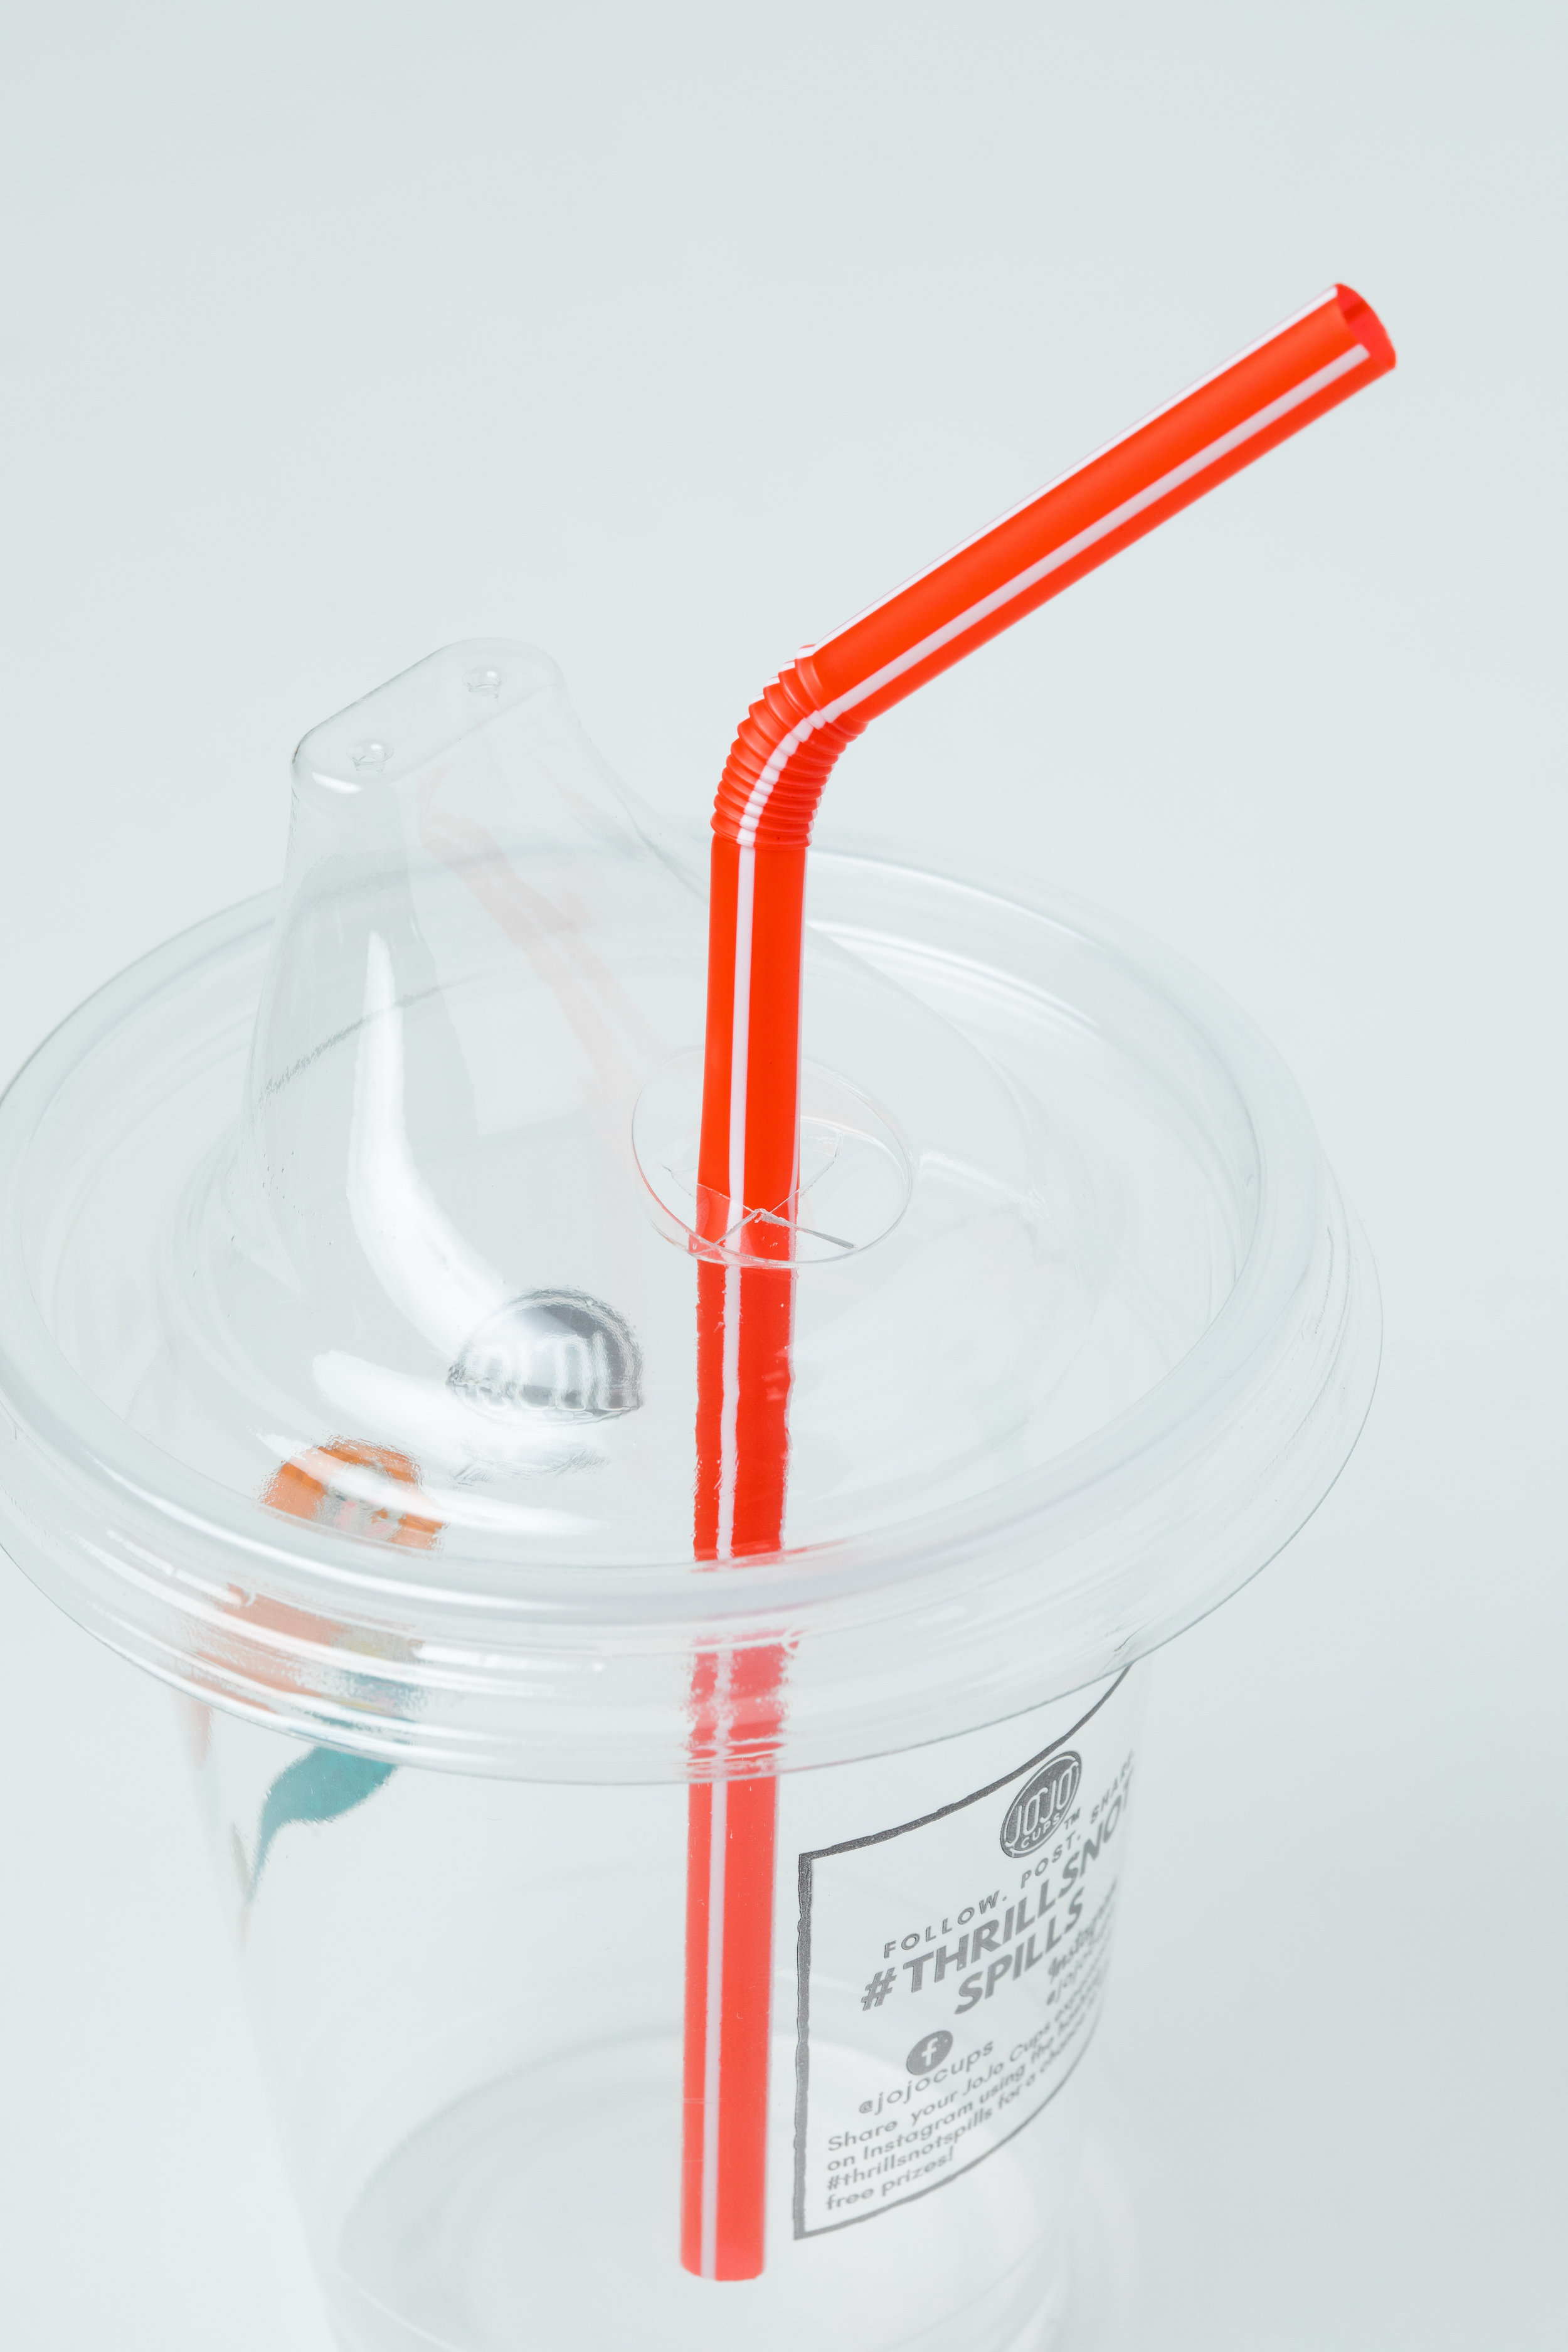 Disposable Plastic Cups Lids Straws